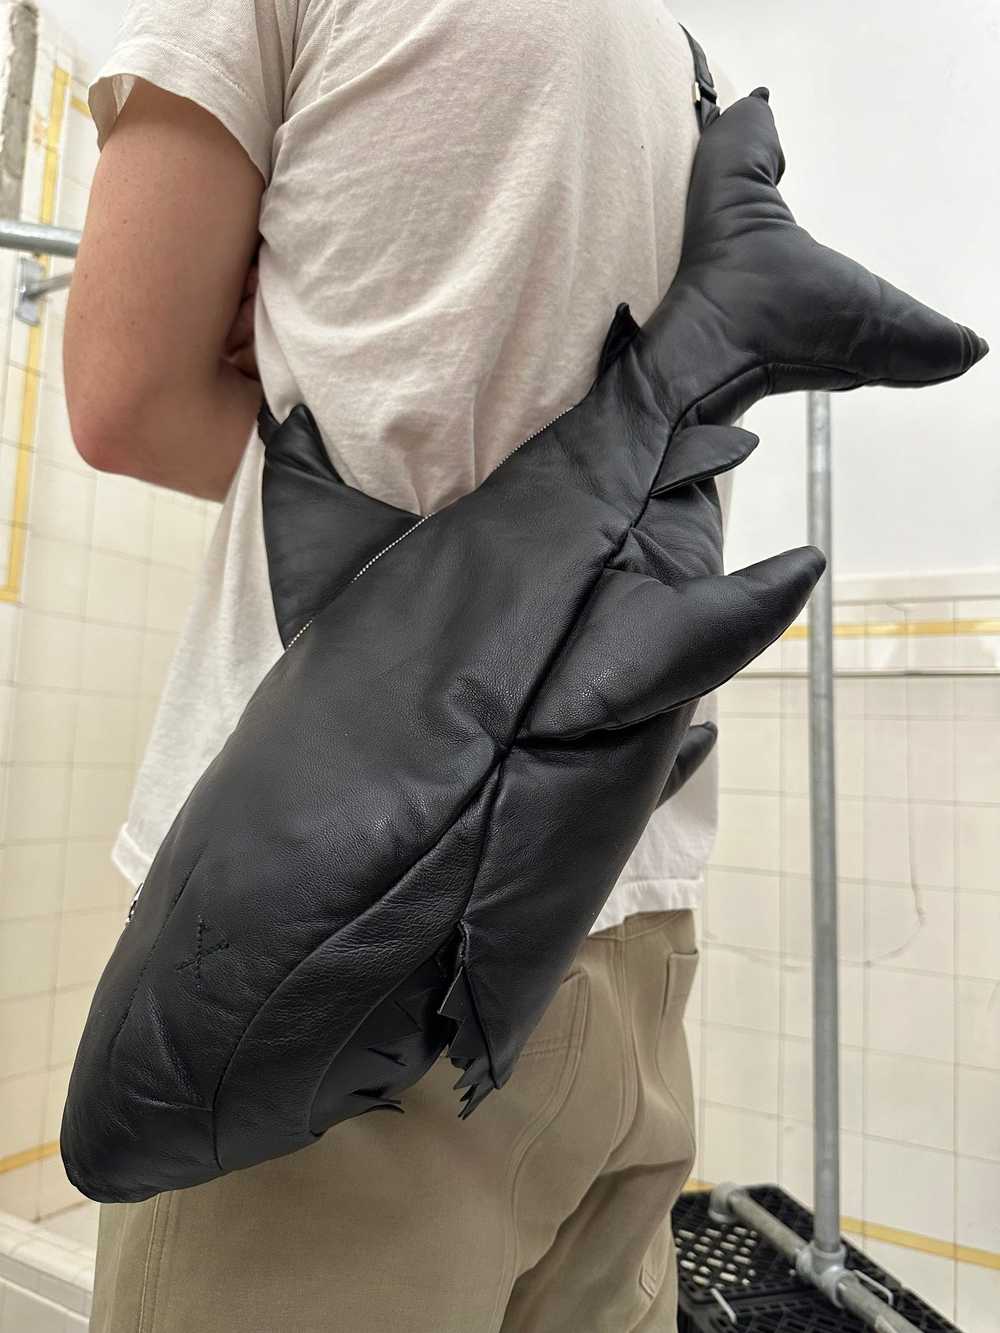 aw2015 Raeburn Black Leather Shark Bag - Size OS - image 3